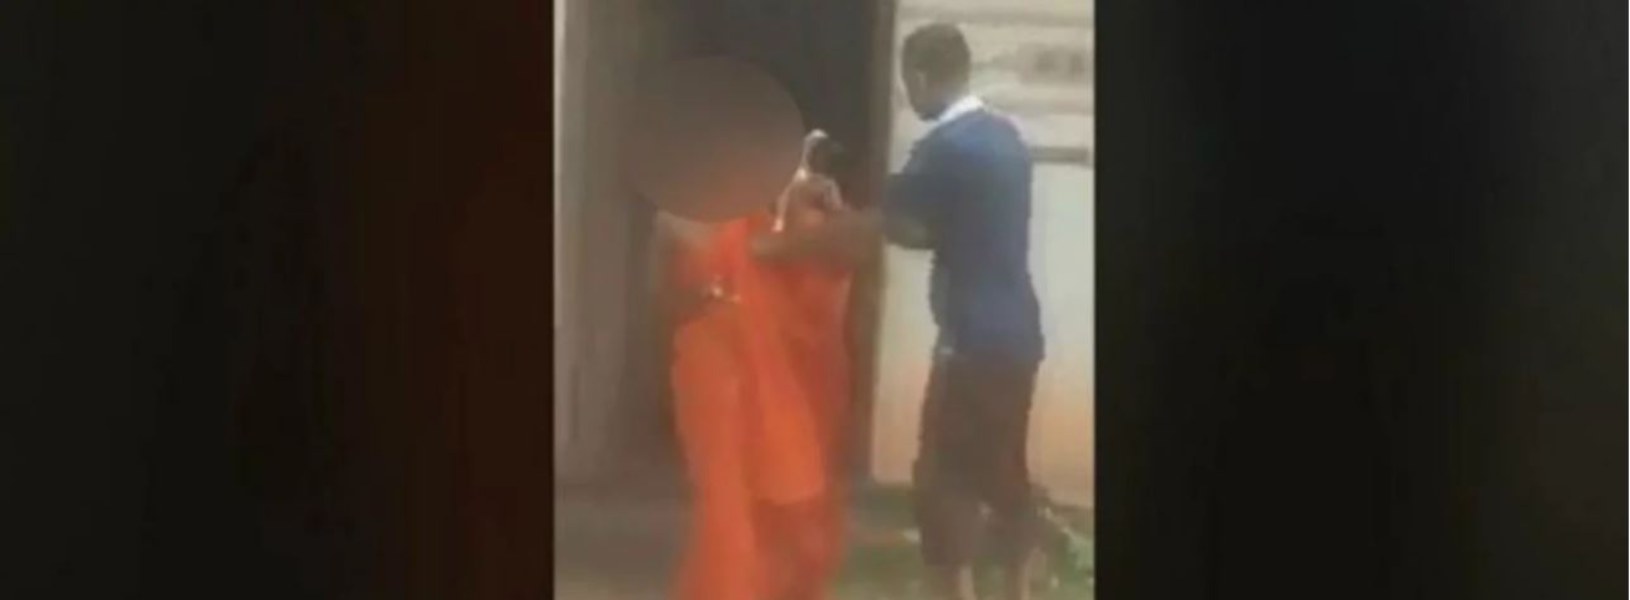 Samanera monks assaulted in Horowpothana: Mahanayake of the Asgiri sect calls on IGP to conduct an investigation